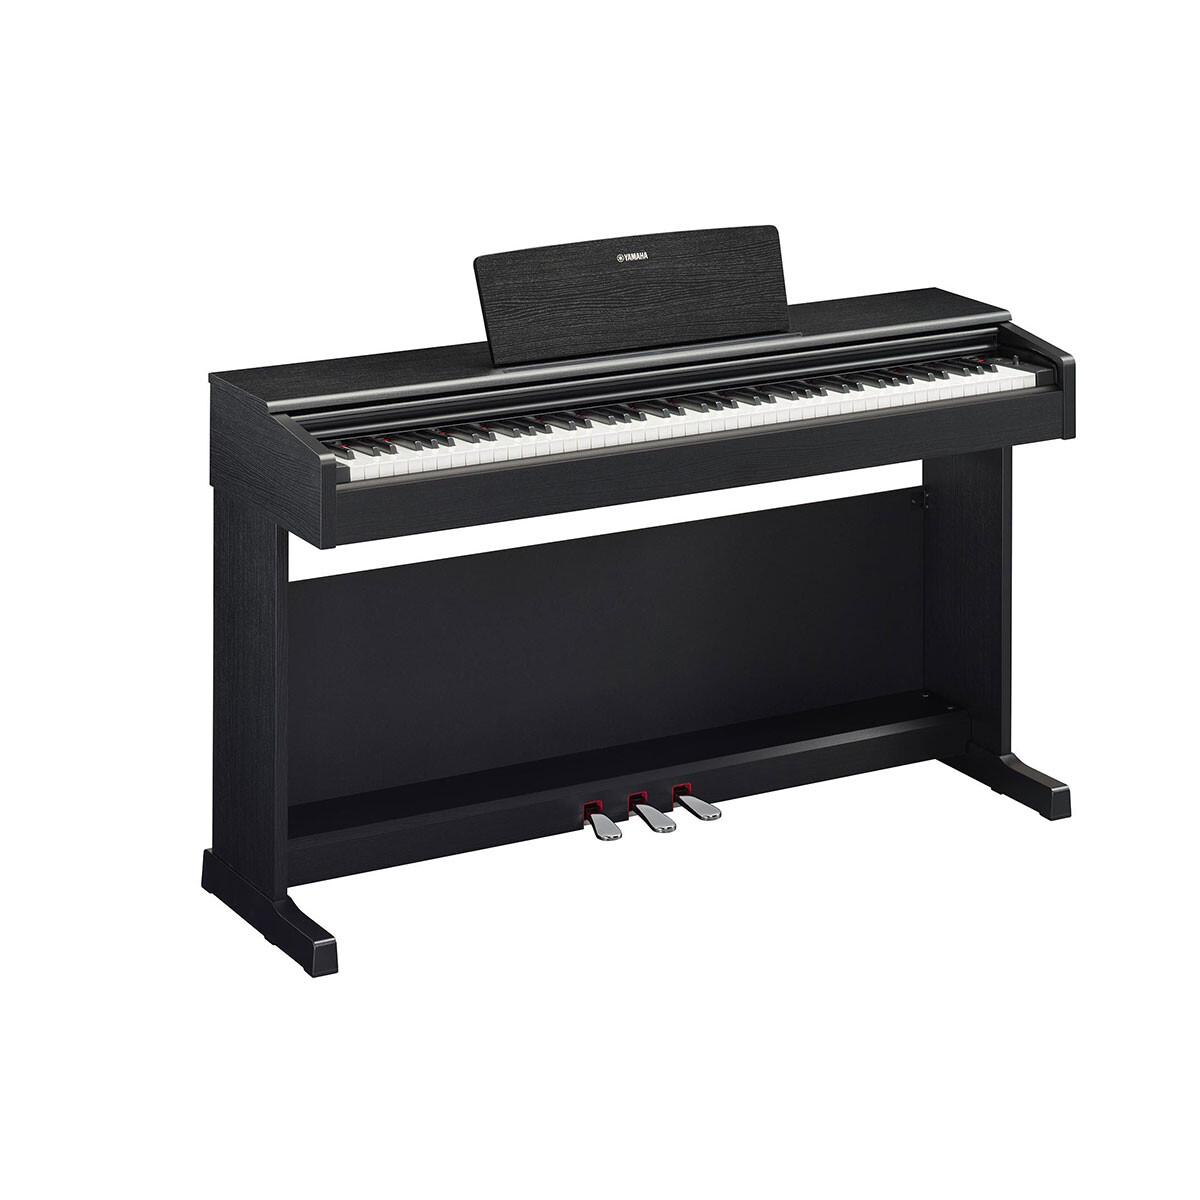 Piano Digital Yamaha Ydp145b Black 